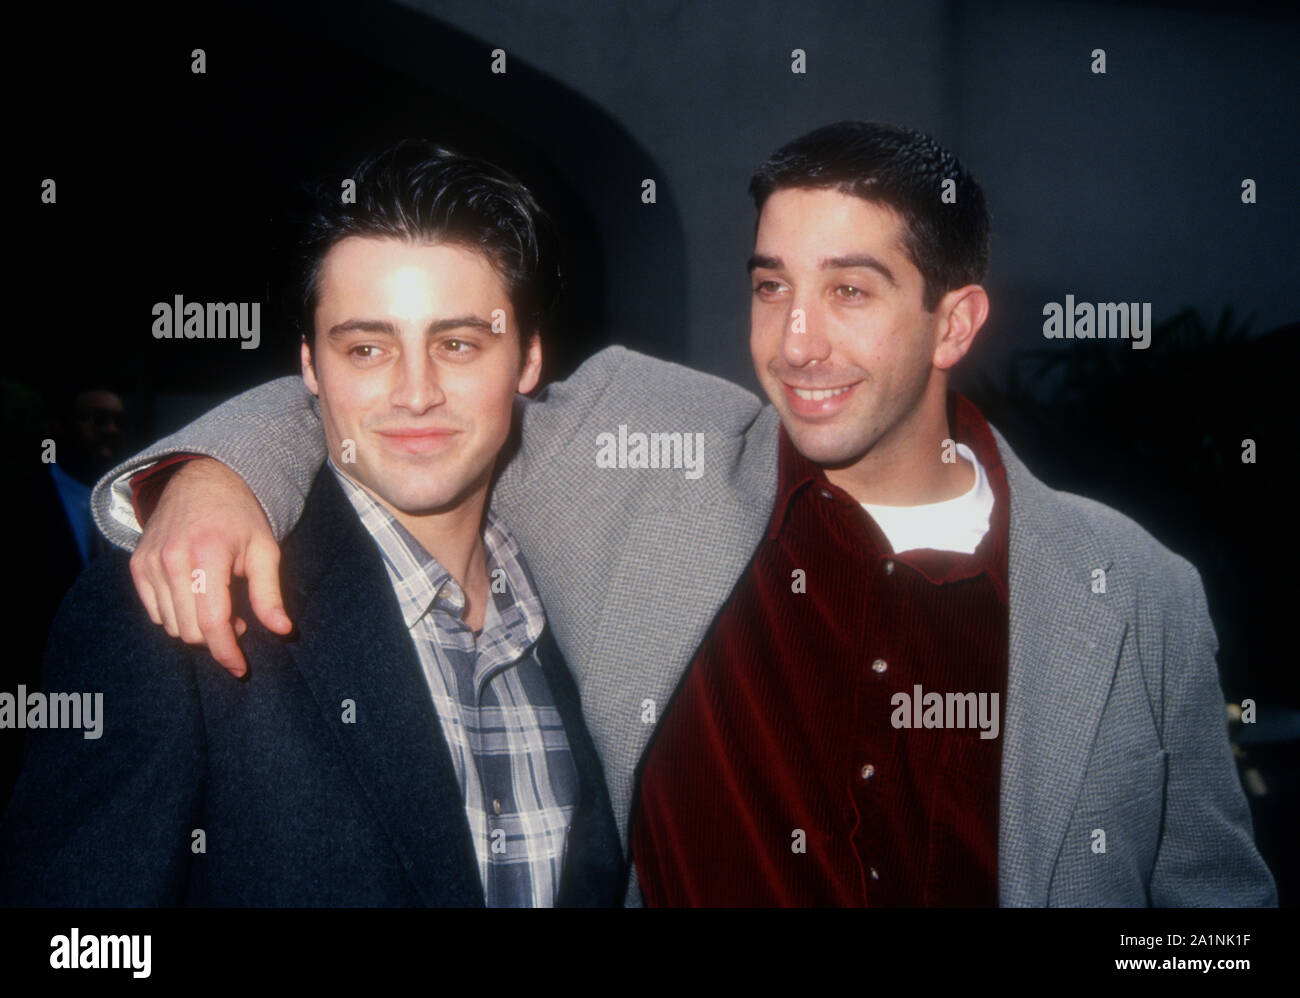 Pasadena California Usa 9th January 1995 Actor Matt Leblanc And Actor David Schwimmer Attend